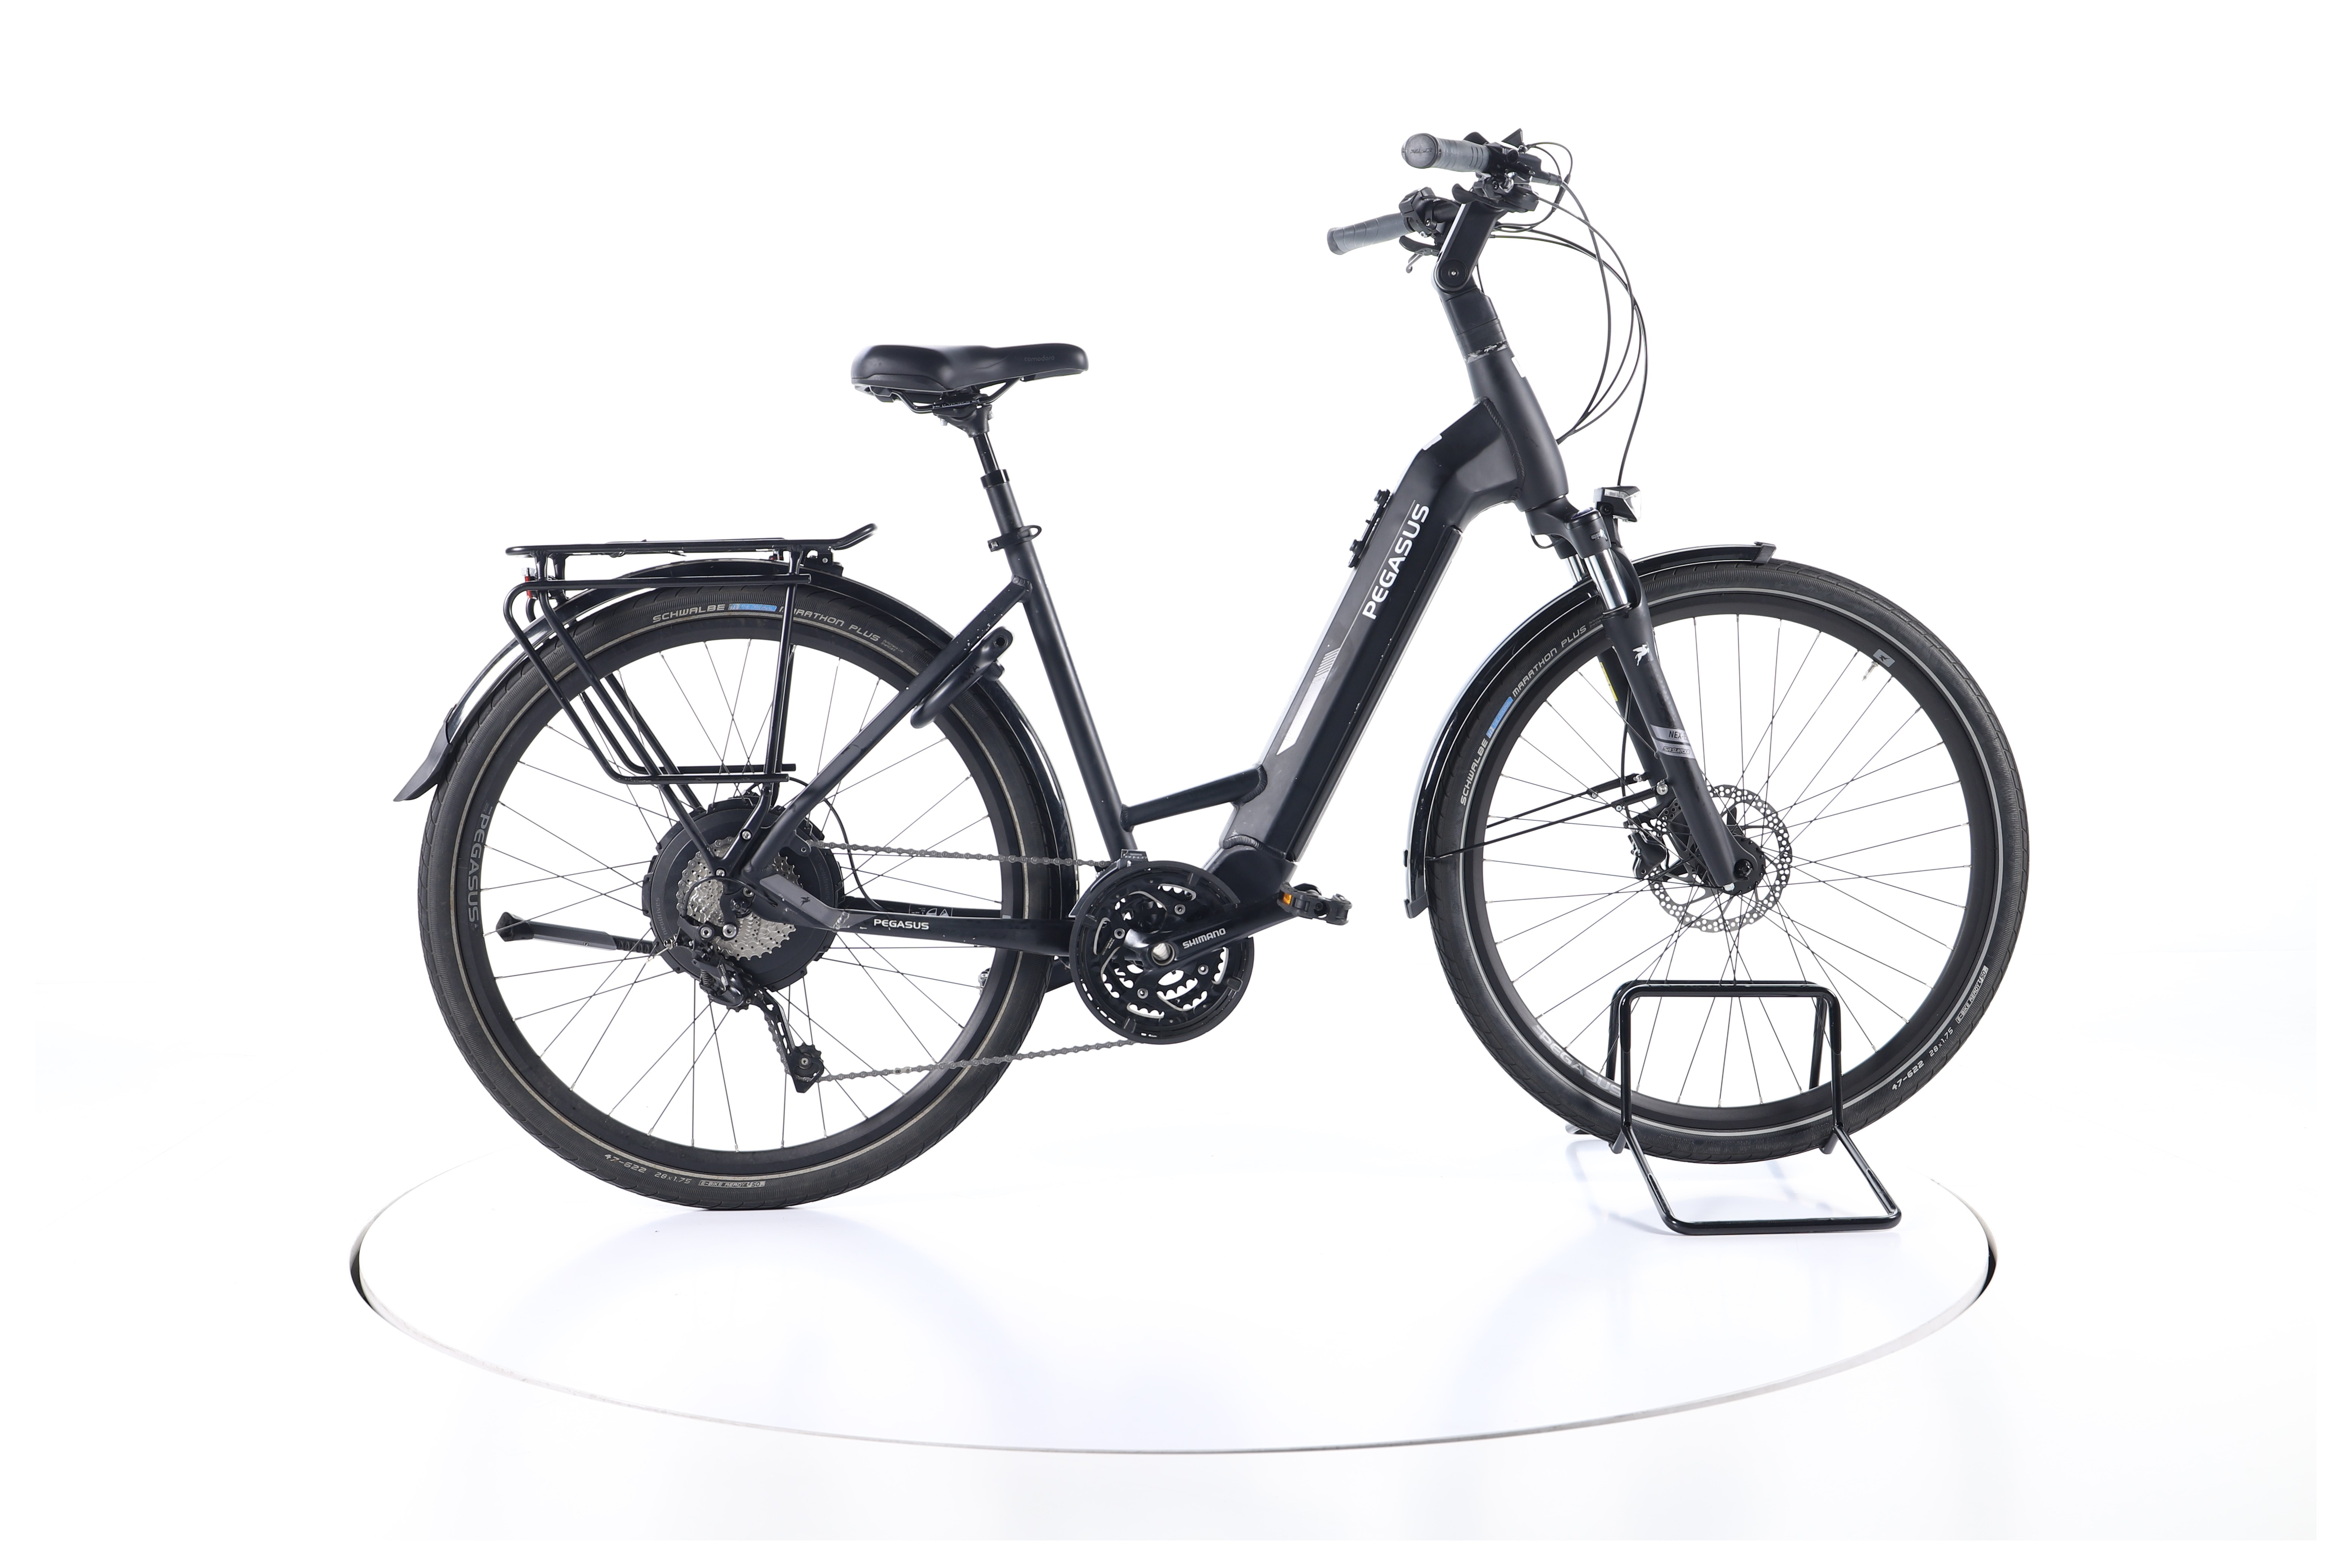 Pegasus Lavida Evo E-Bike Deep Beginner 2020 Used & Refurbished Yamaha 750-